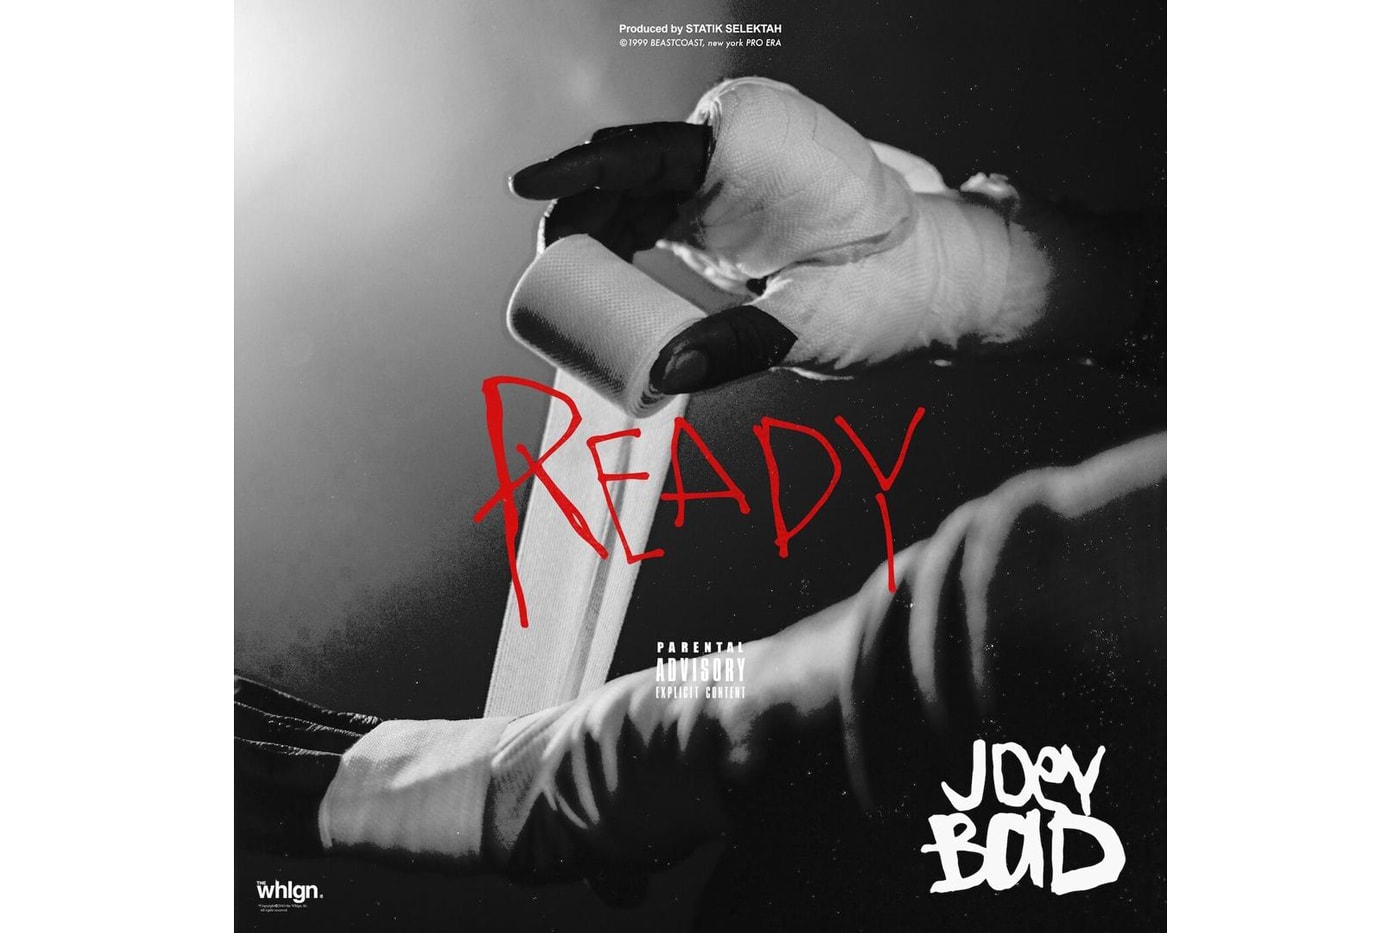 Joey Bada$$ Shares New Song “Ready,” Announces New Album